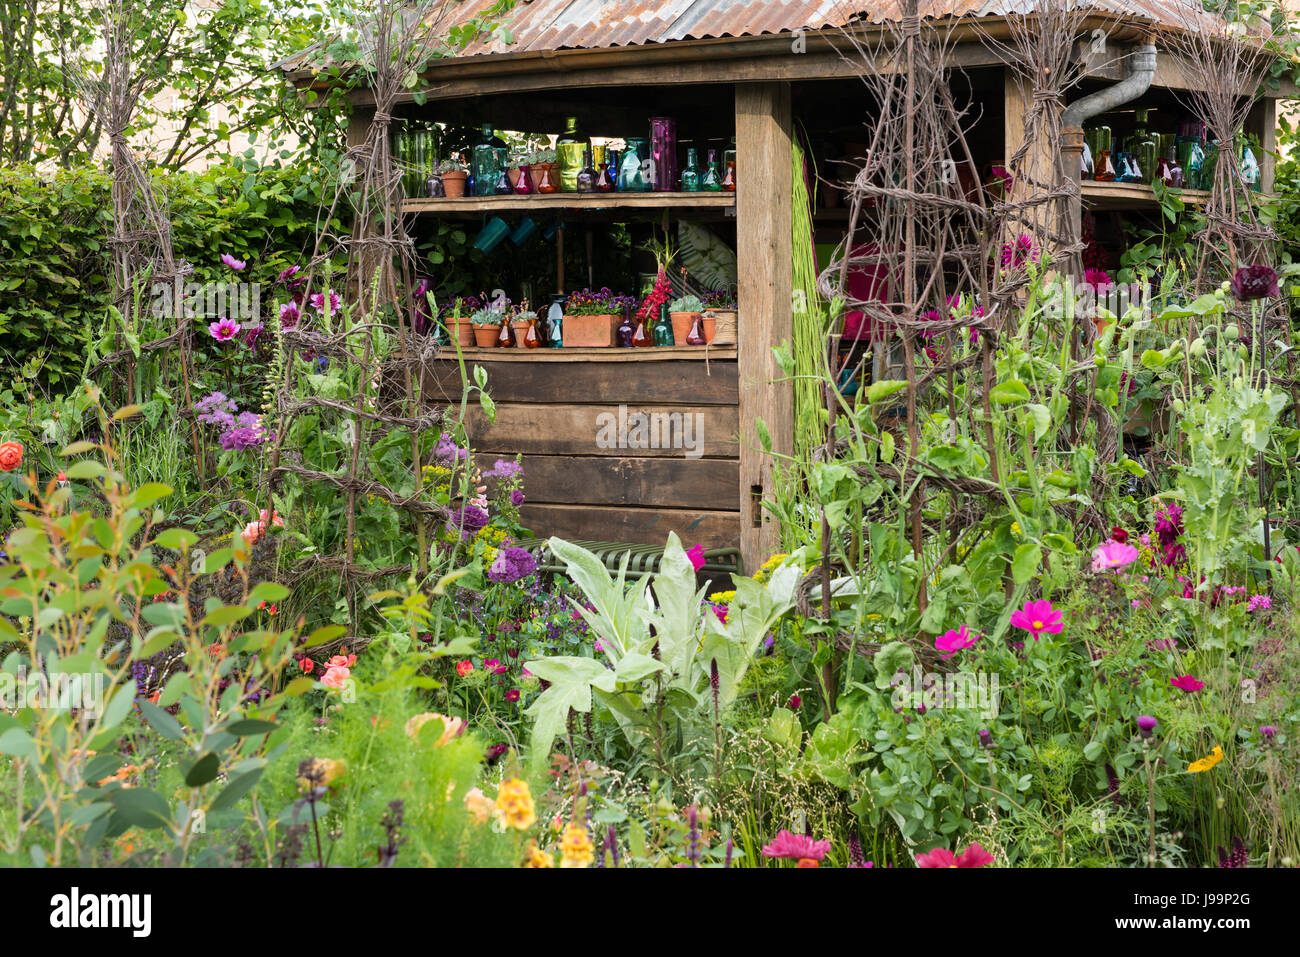 Colourful flowers including Allium ‘Purple Sensation, Digitalis ‘Sutton’s Apricot’, Cosmos bipinnatus and Dahlia ‘Hillcrest Royal’ around a shed decor Stock Photo